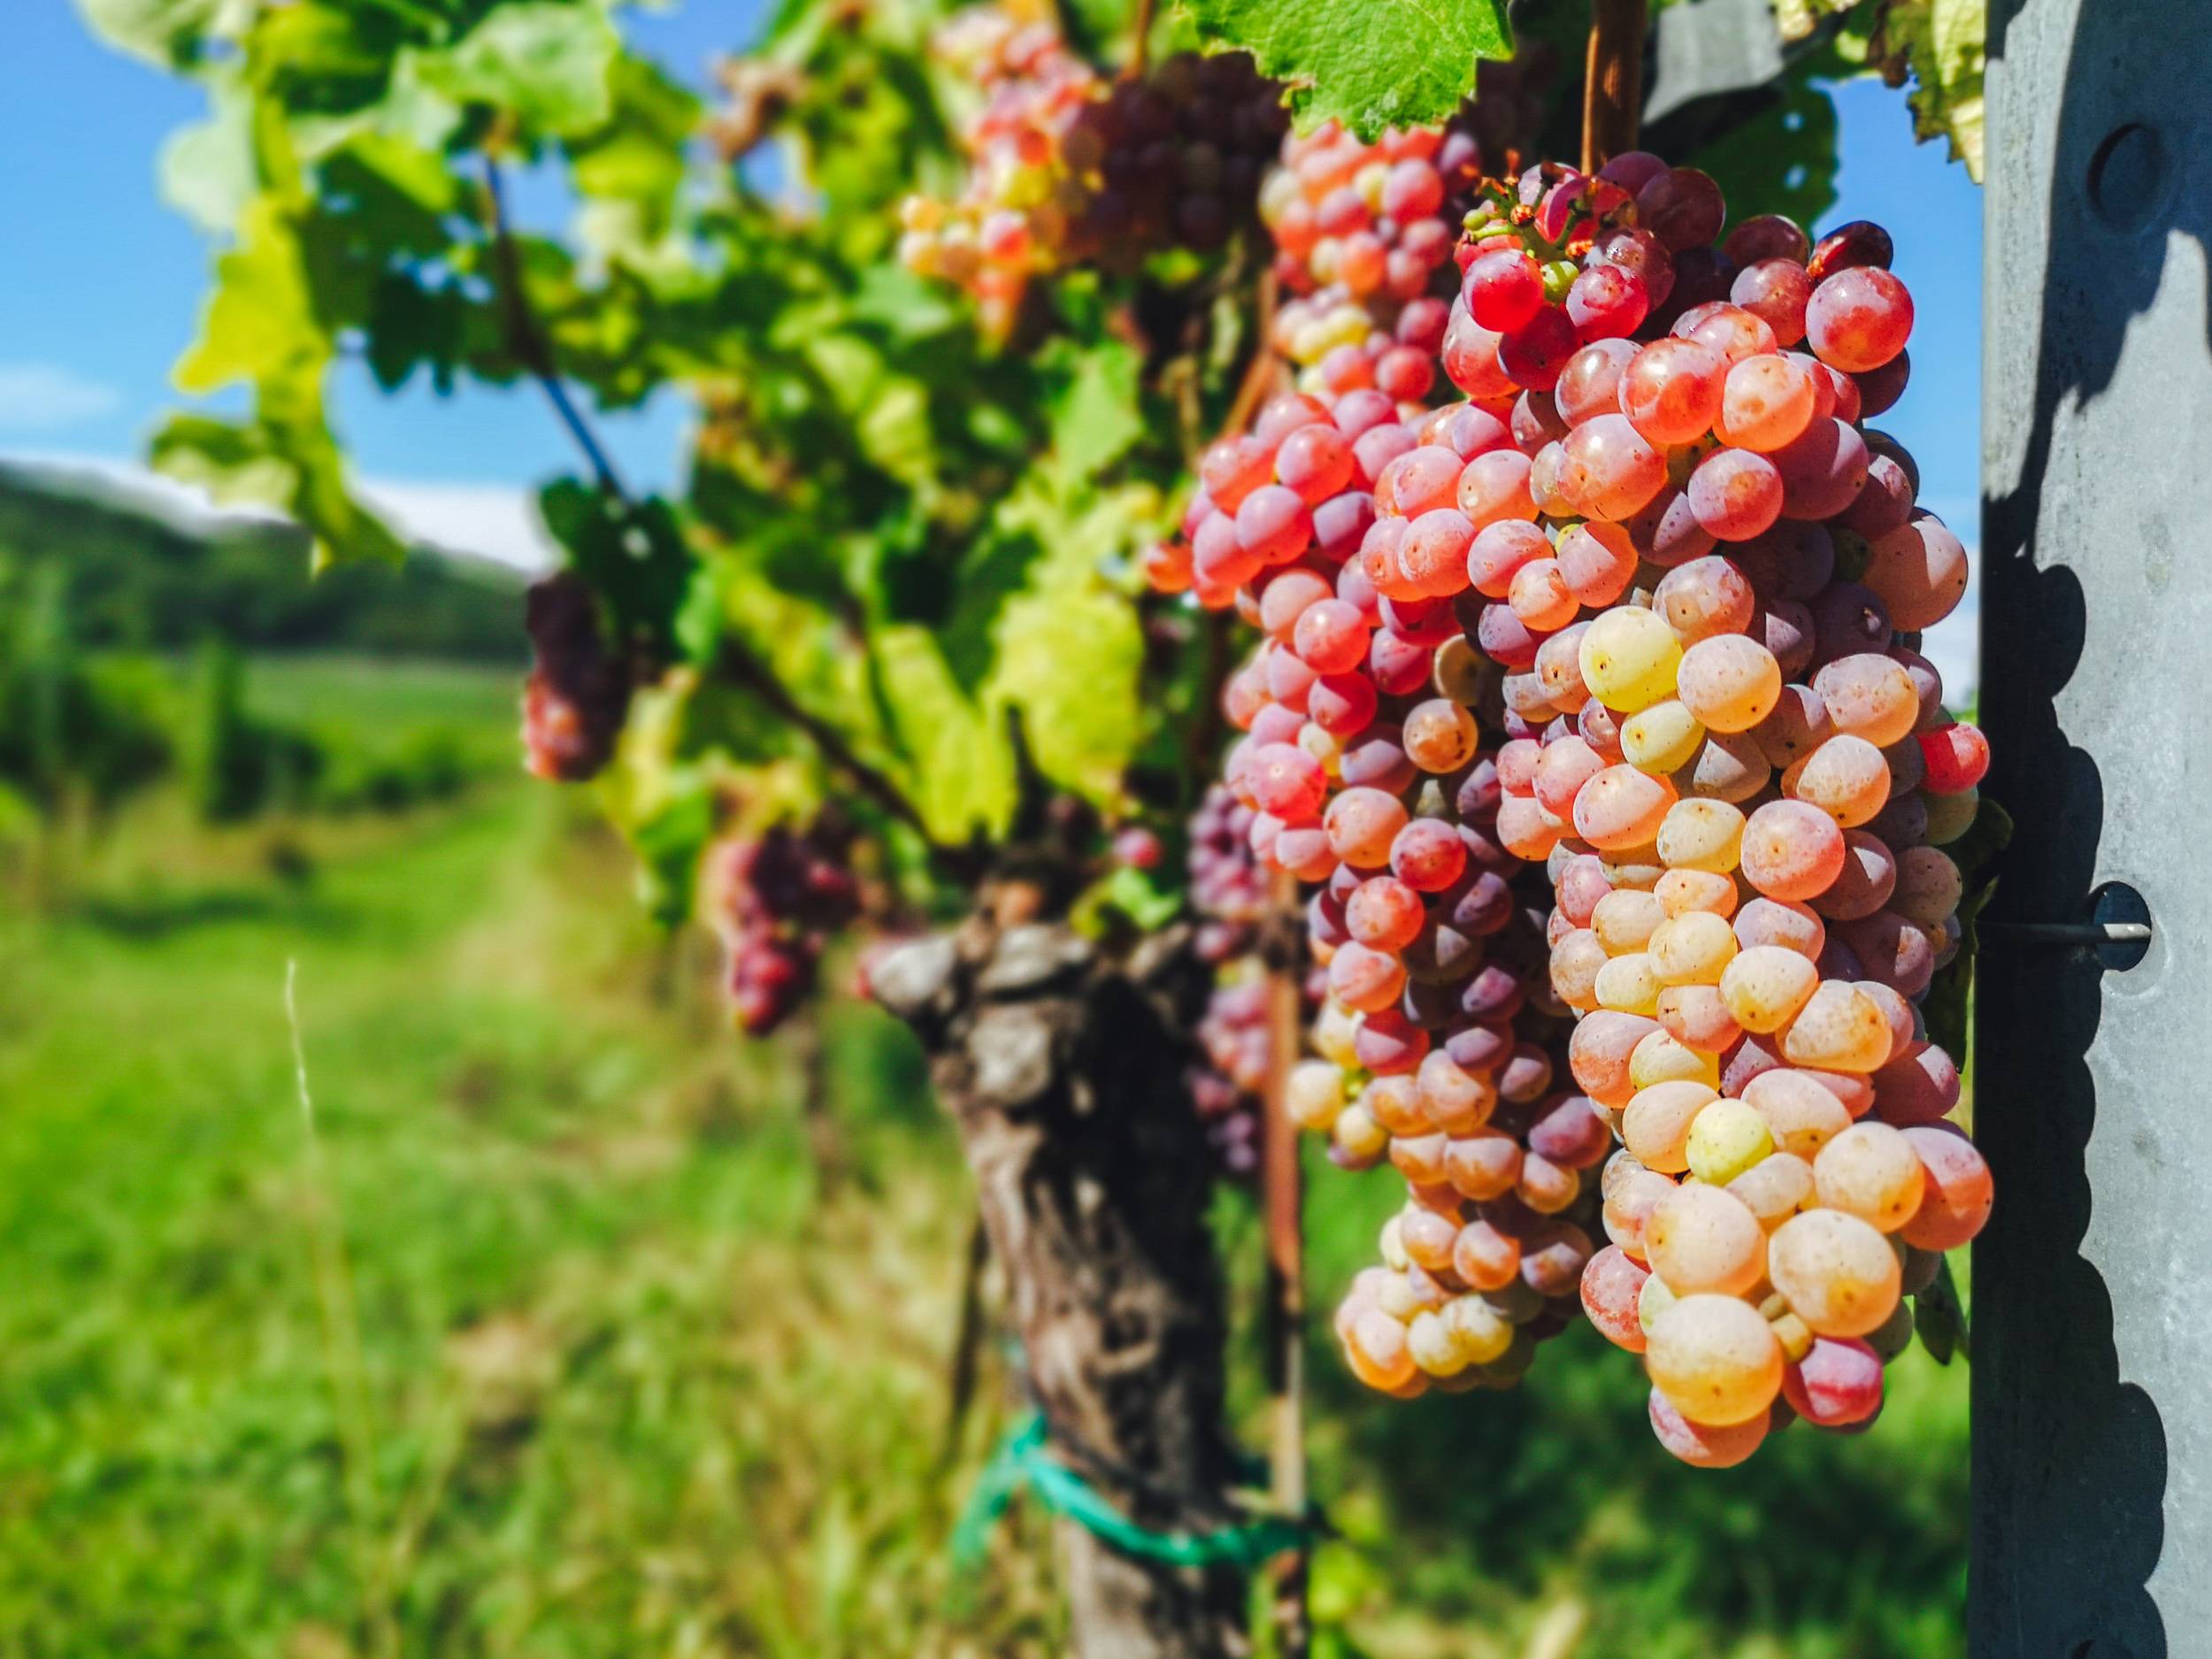 Zierfandler wine grapes Thermenregion, Austria